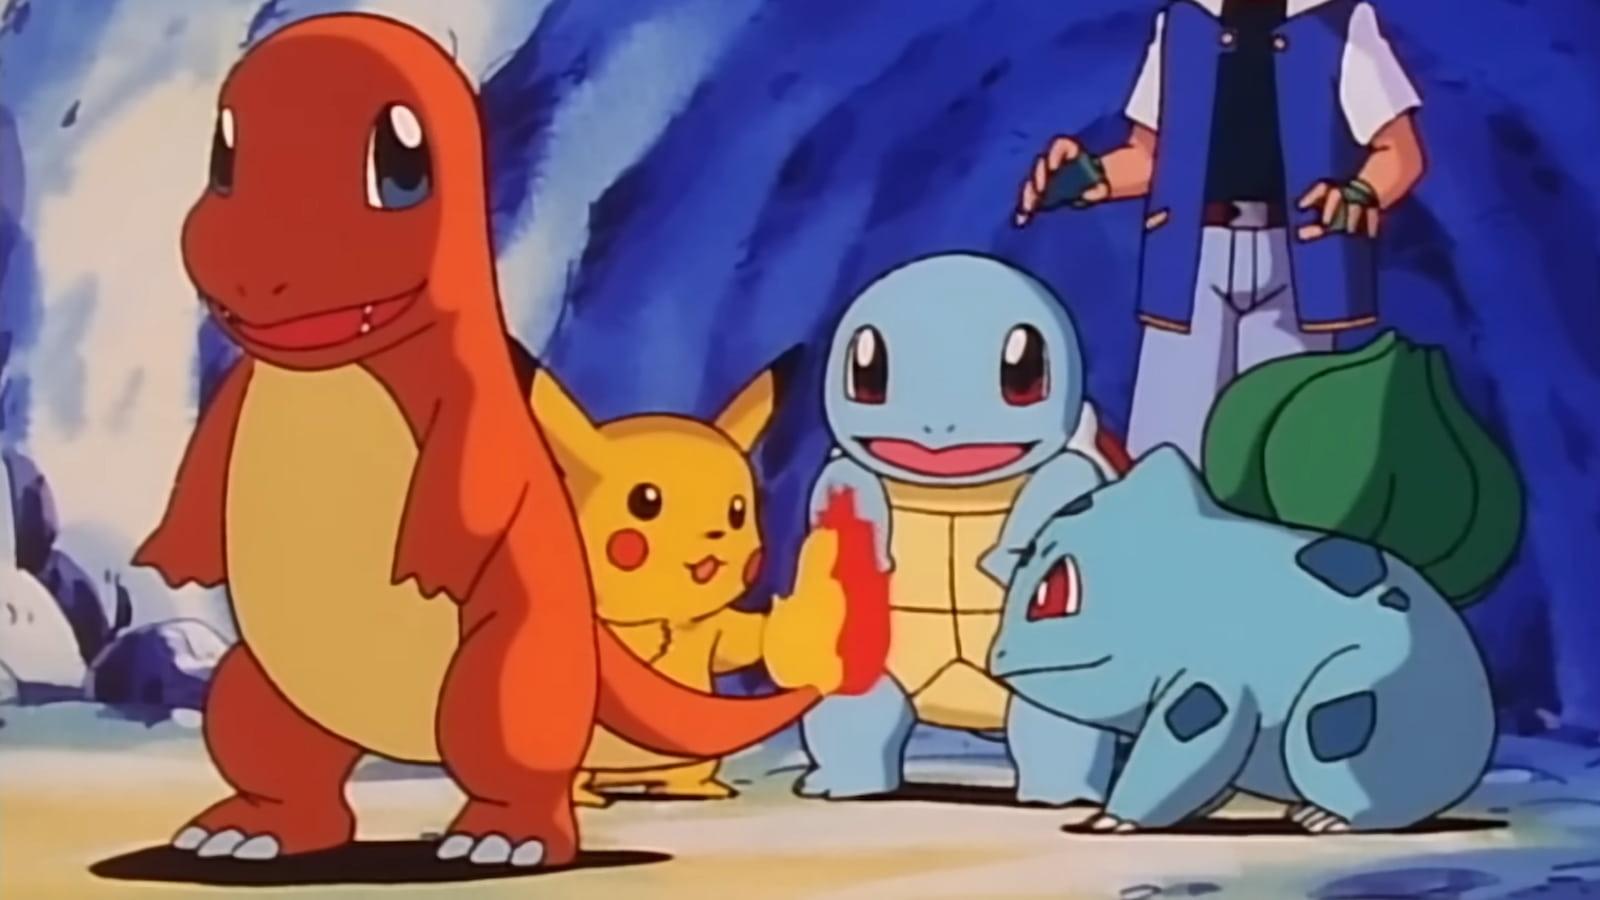 Pokemon snacks have huge error thanks to similar-looking 'mons